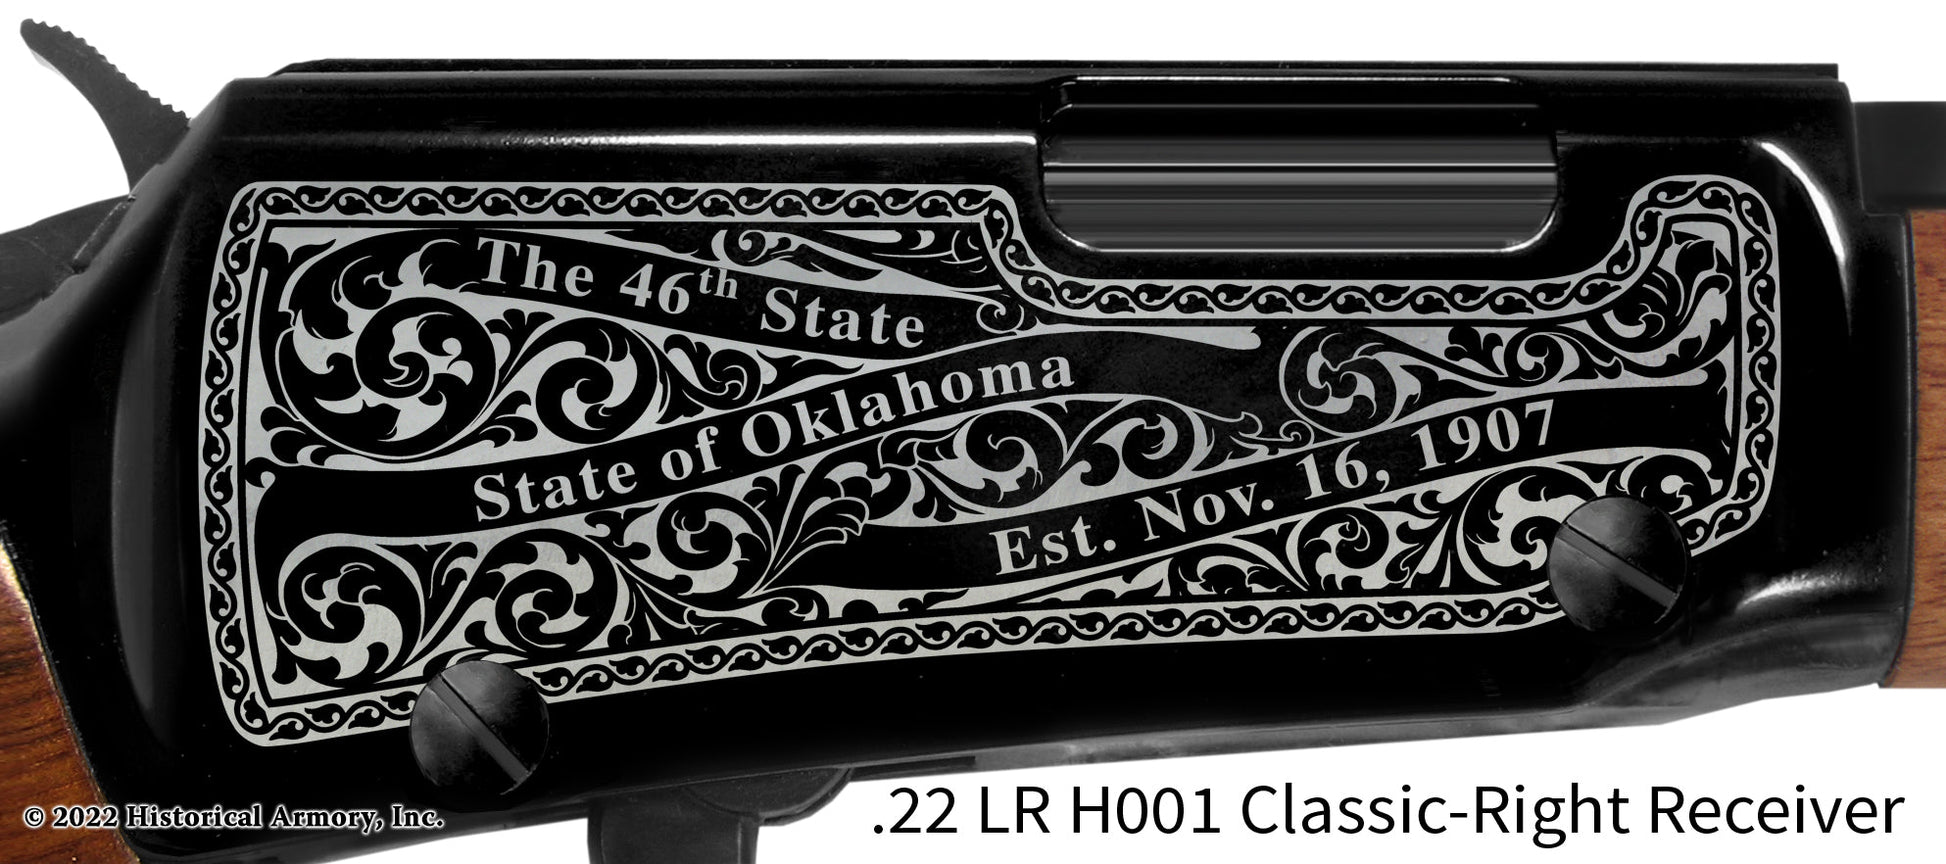 Cimarron County Oklahoma Engraved Henry H001 Rifle